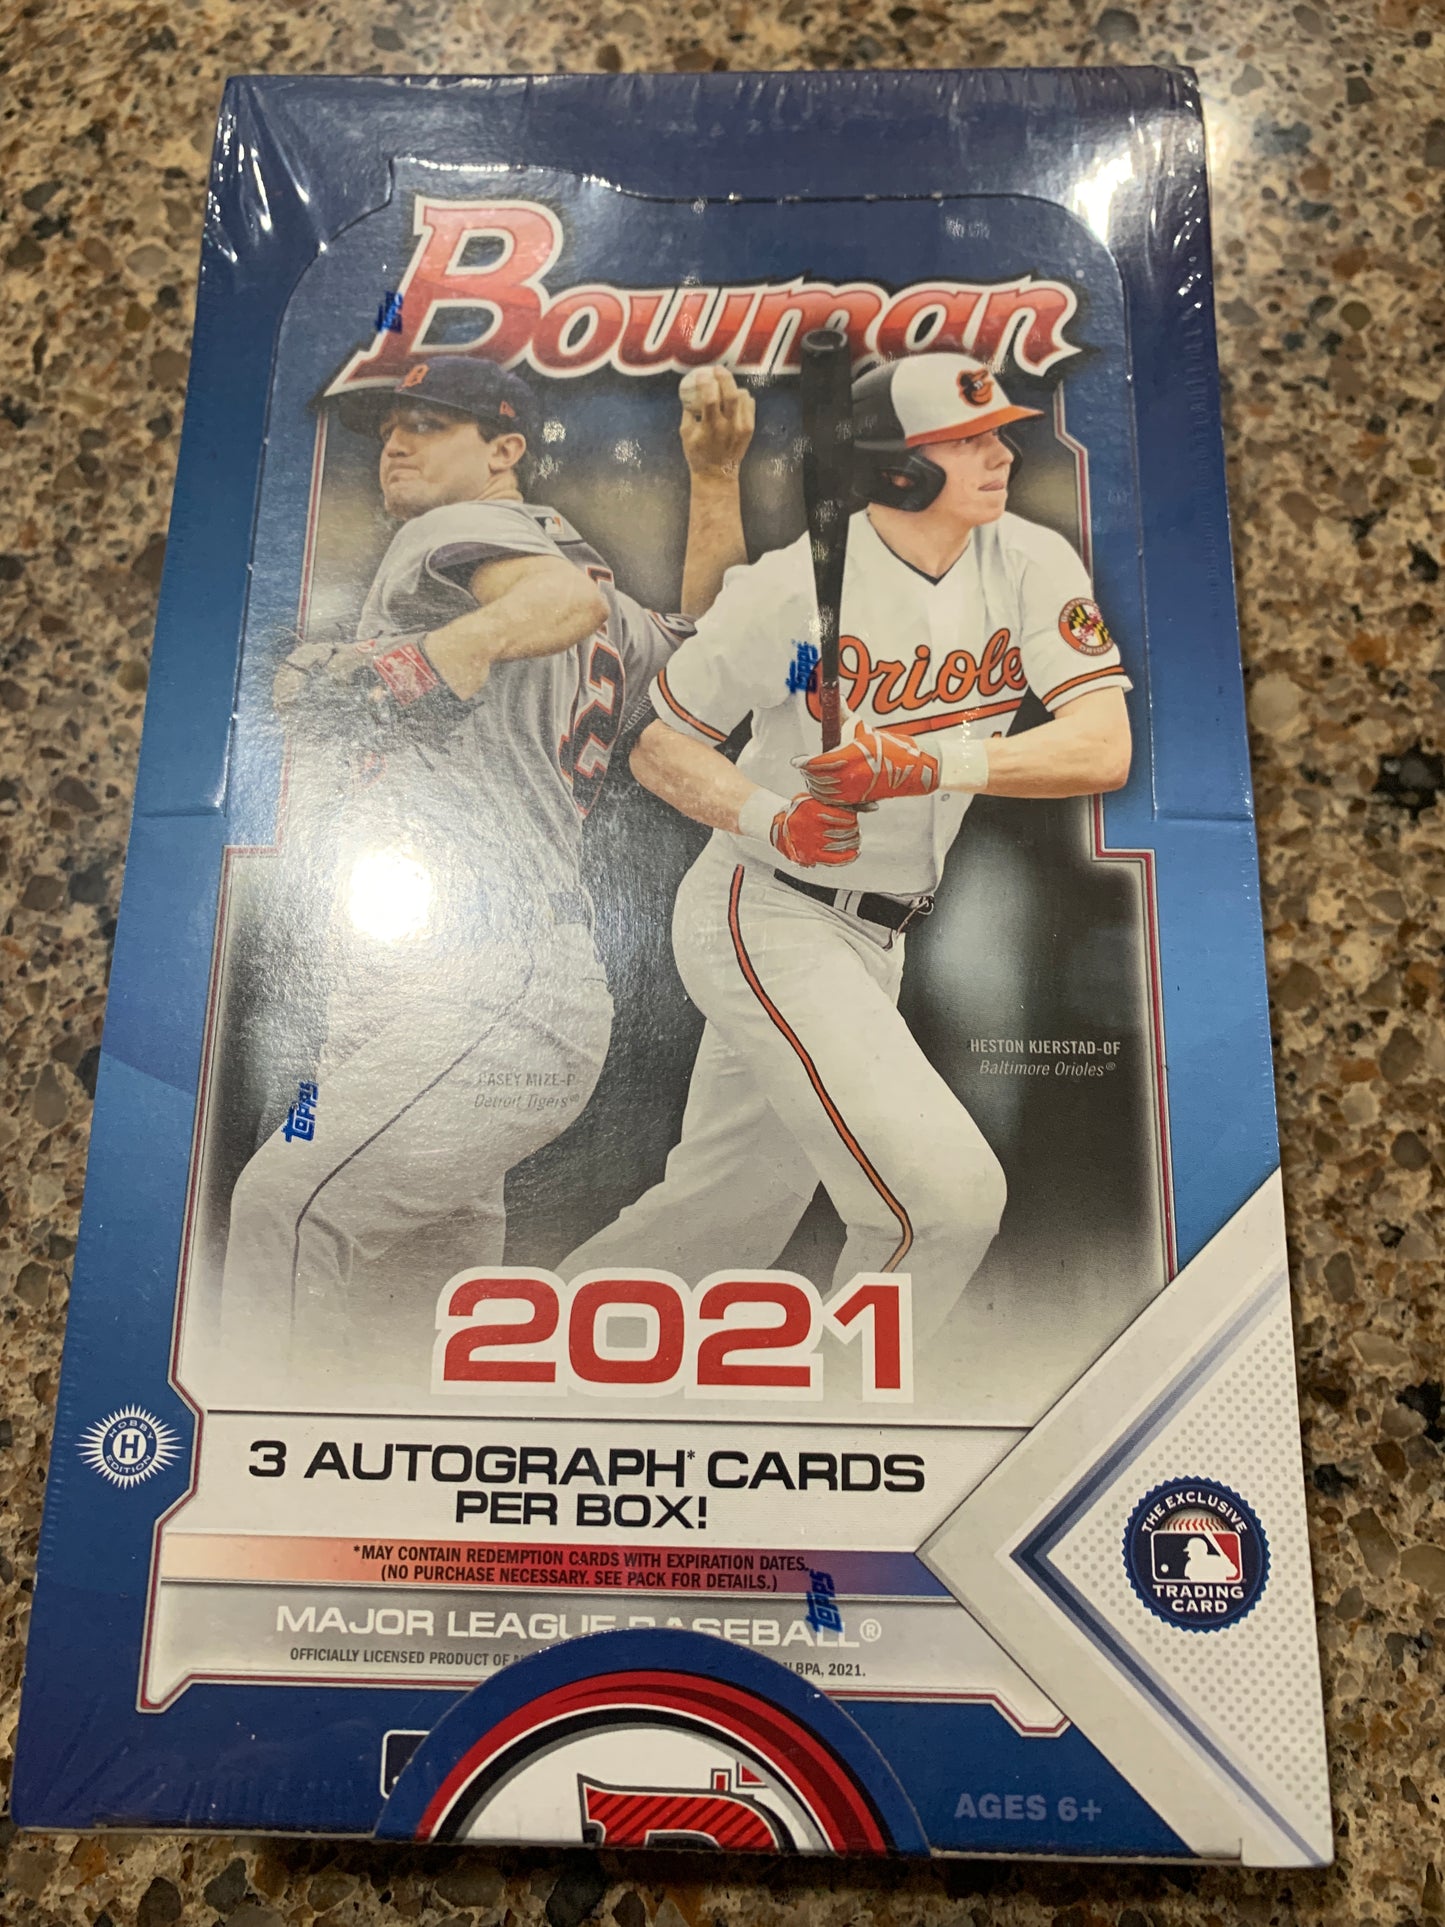 2021 Bowman Baseball Jumbo Box HTA Factory look for Joey Bart and Alec Bohm rookies